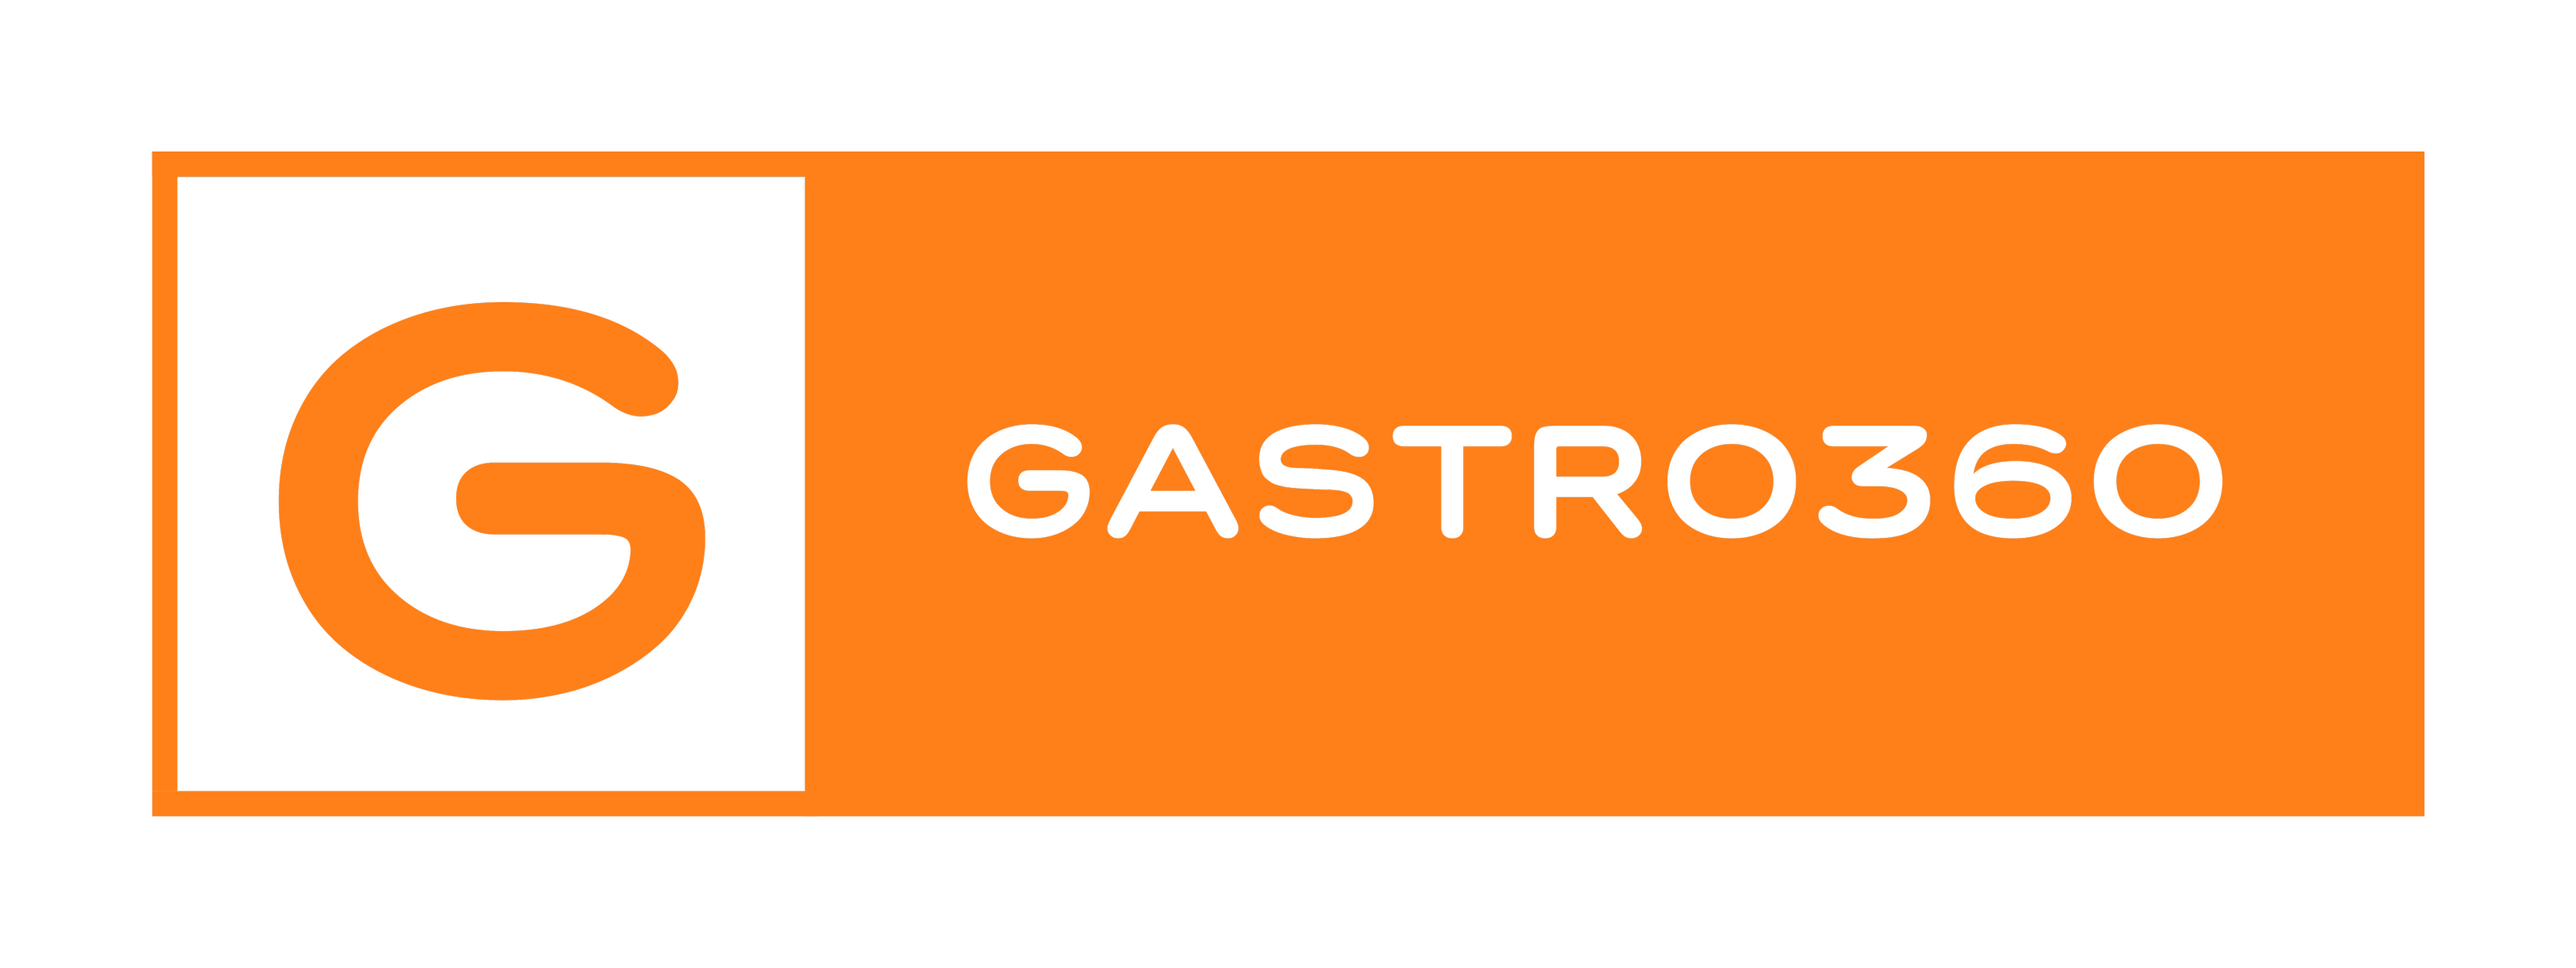 Gastro360